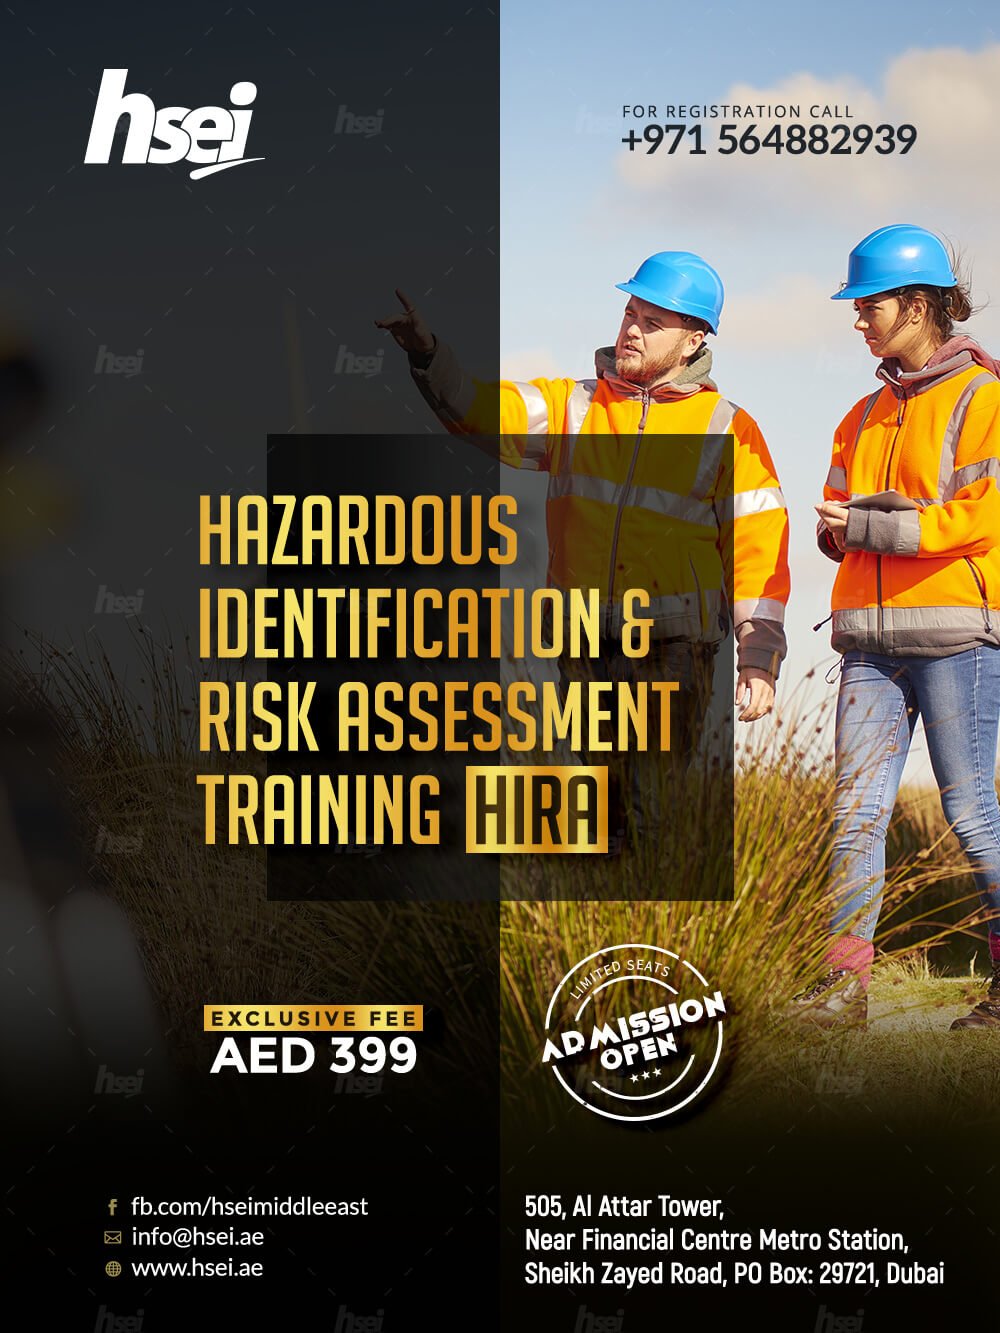 HSEI Dubai Hazardous Identifiation and Risk Assessment Training